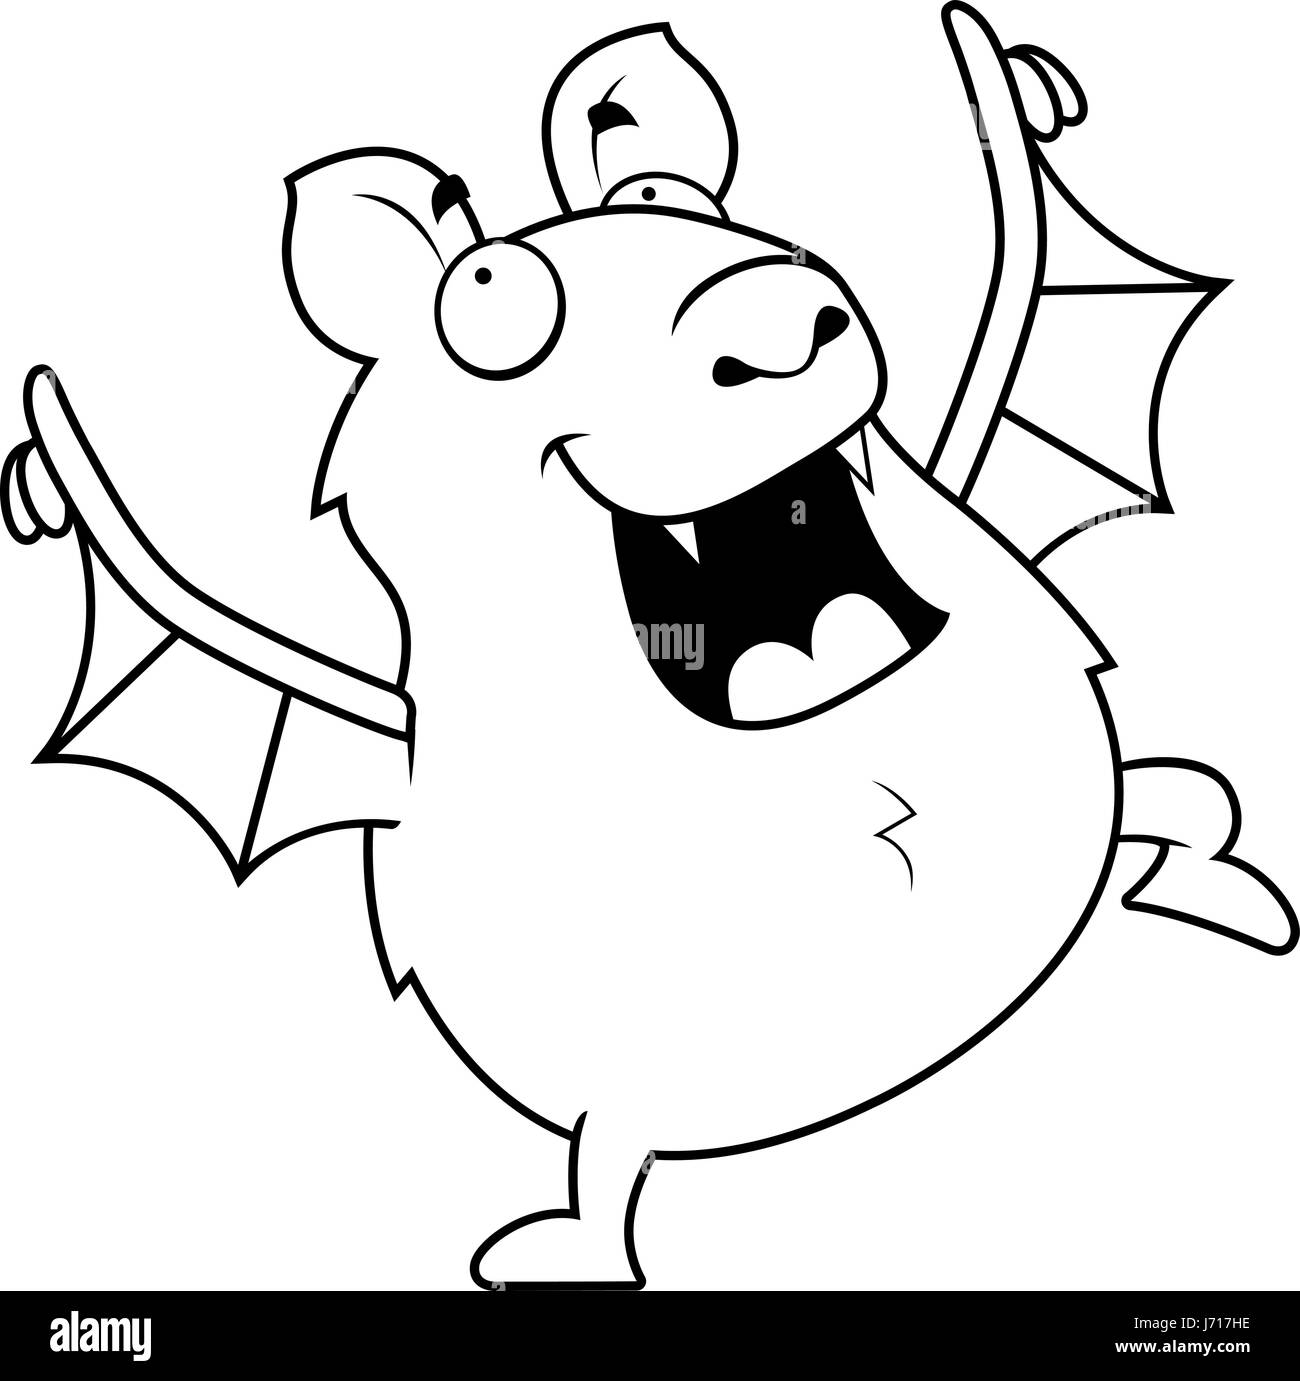 A happy cartoon bat dancing and smiling Stock Vector Image & Art - Alamy